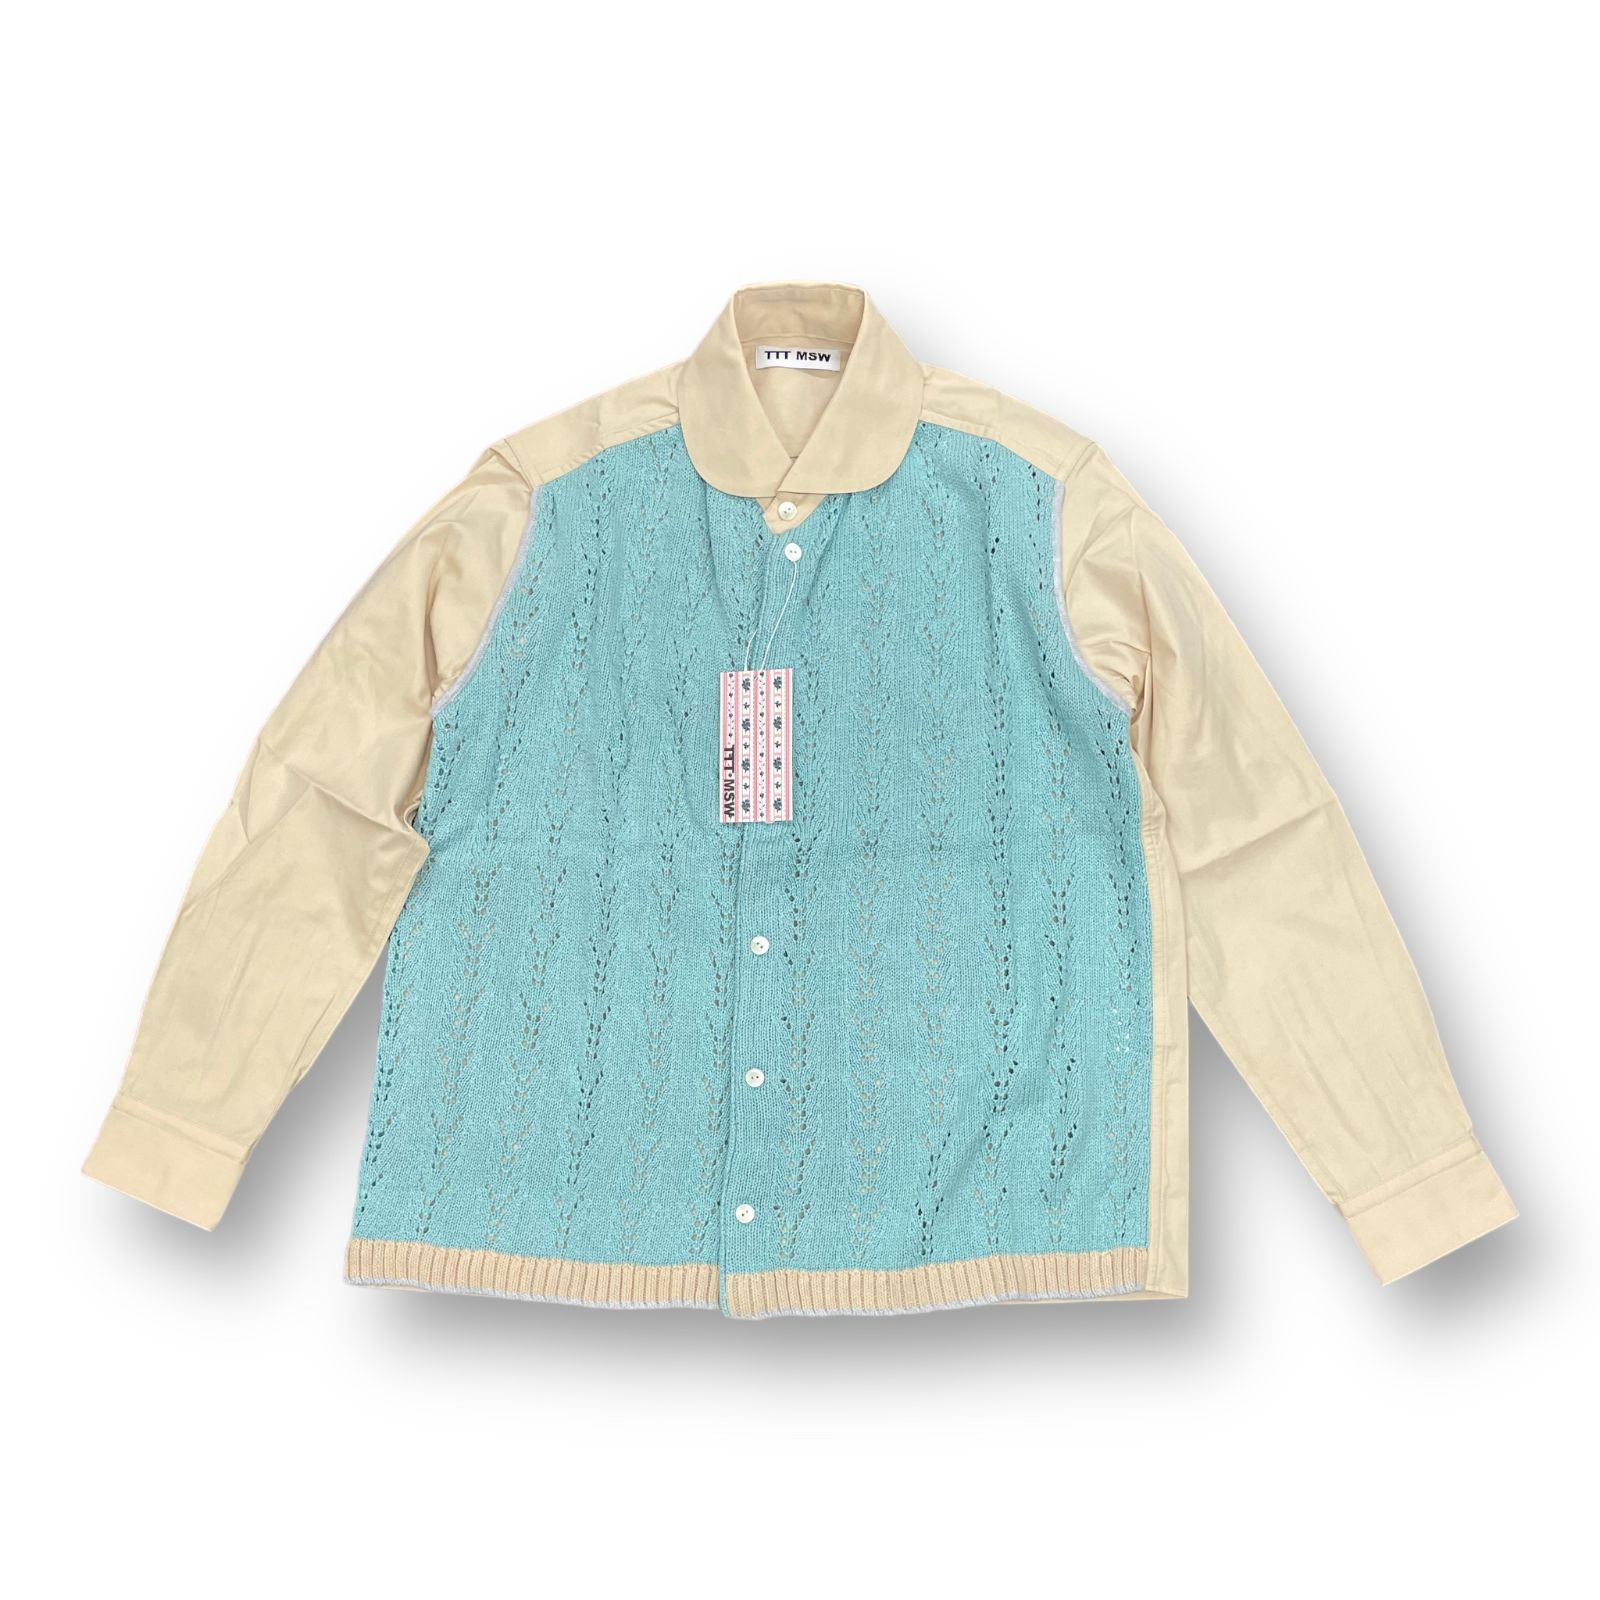 TTT MSW | Knit cardigan docking shirt